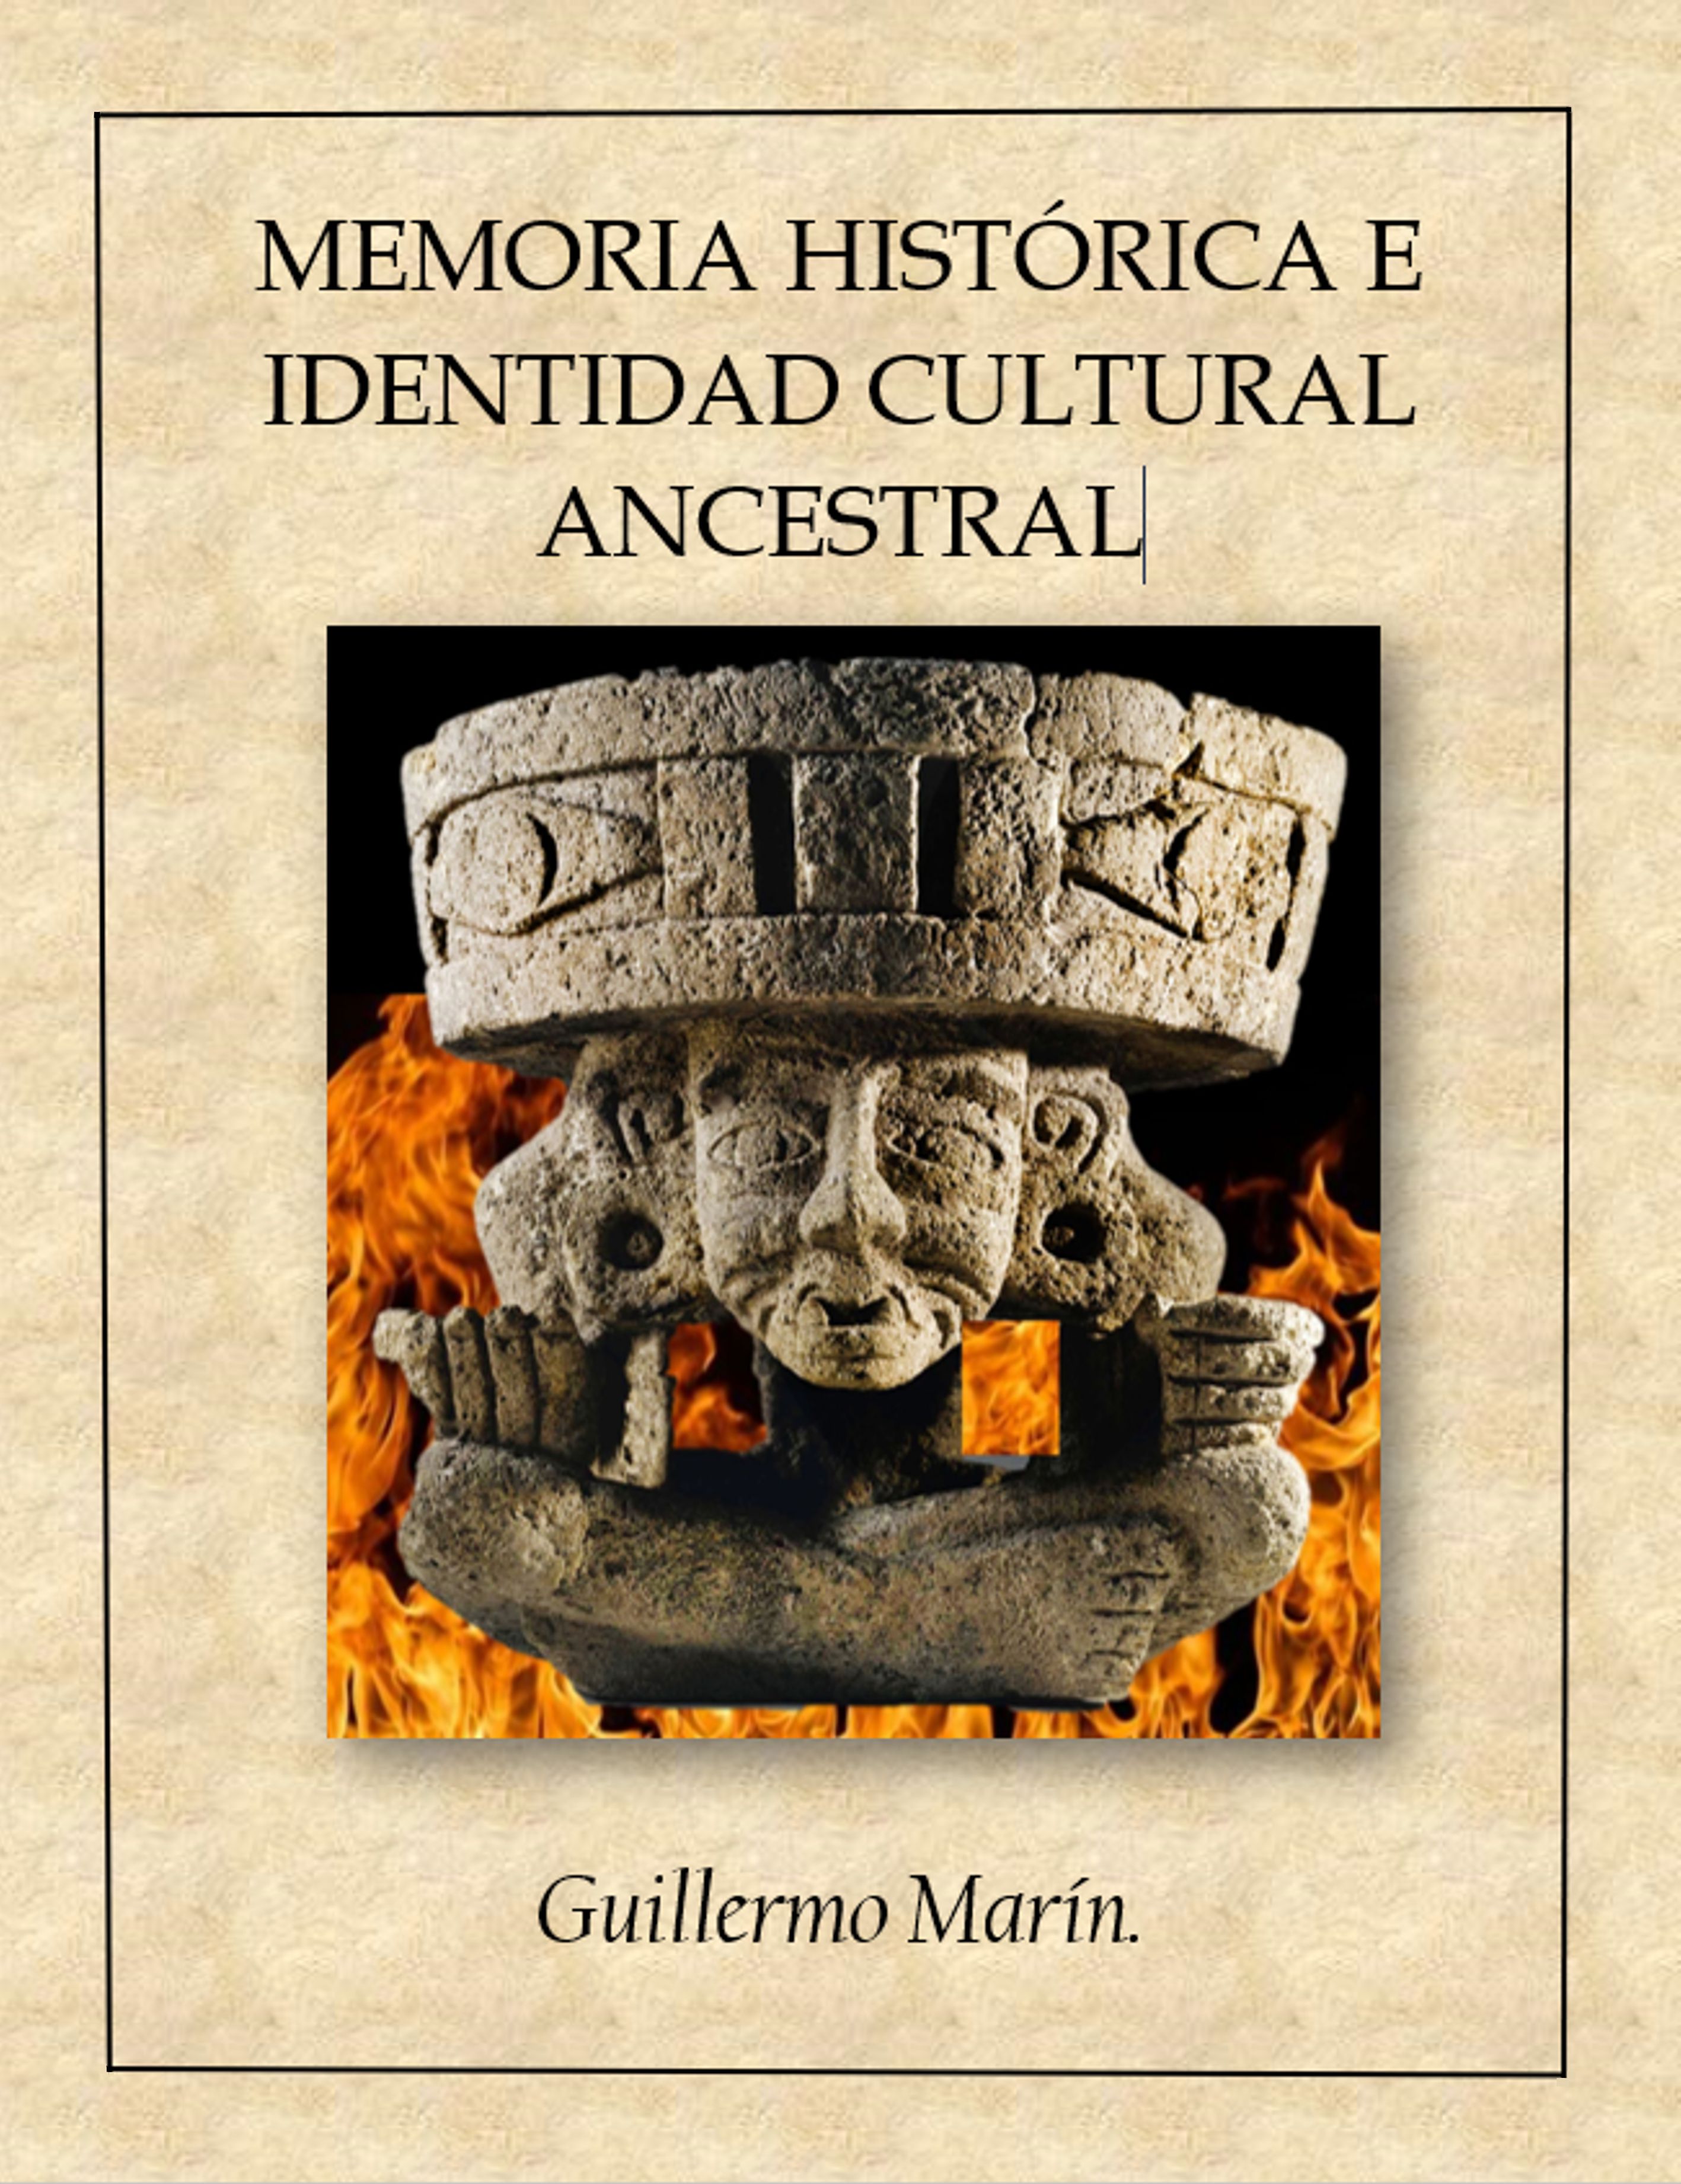 MEMORIA HISTÓRICA E IDENTIDAD CULTURAL ANCESTRAL